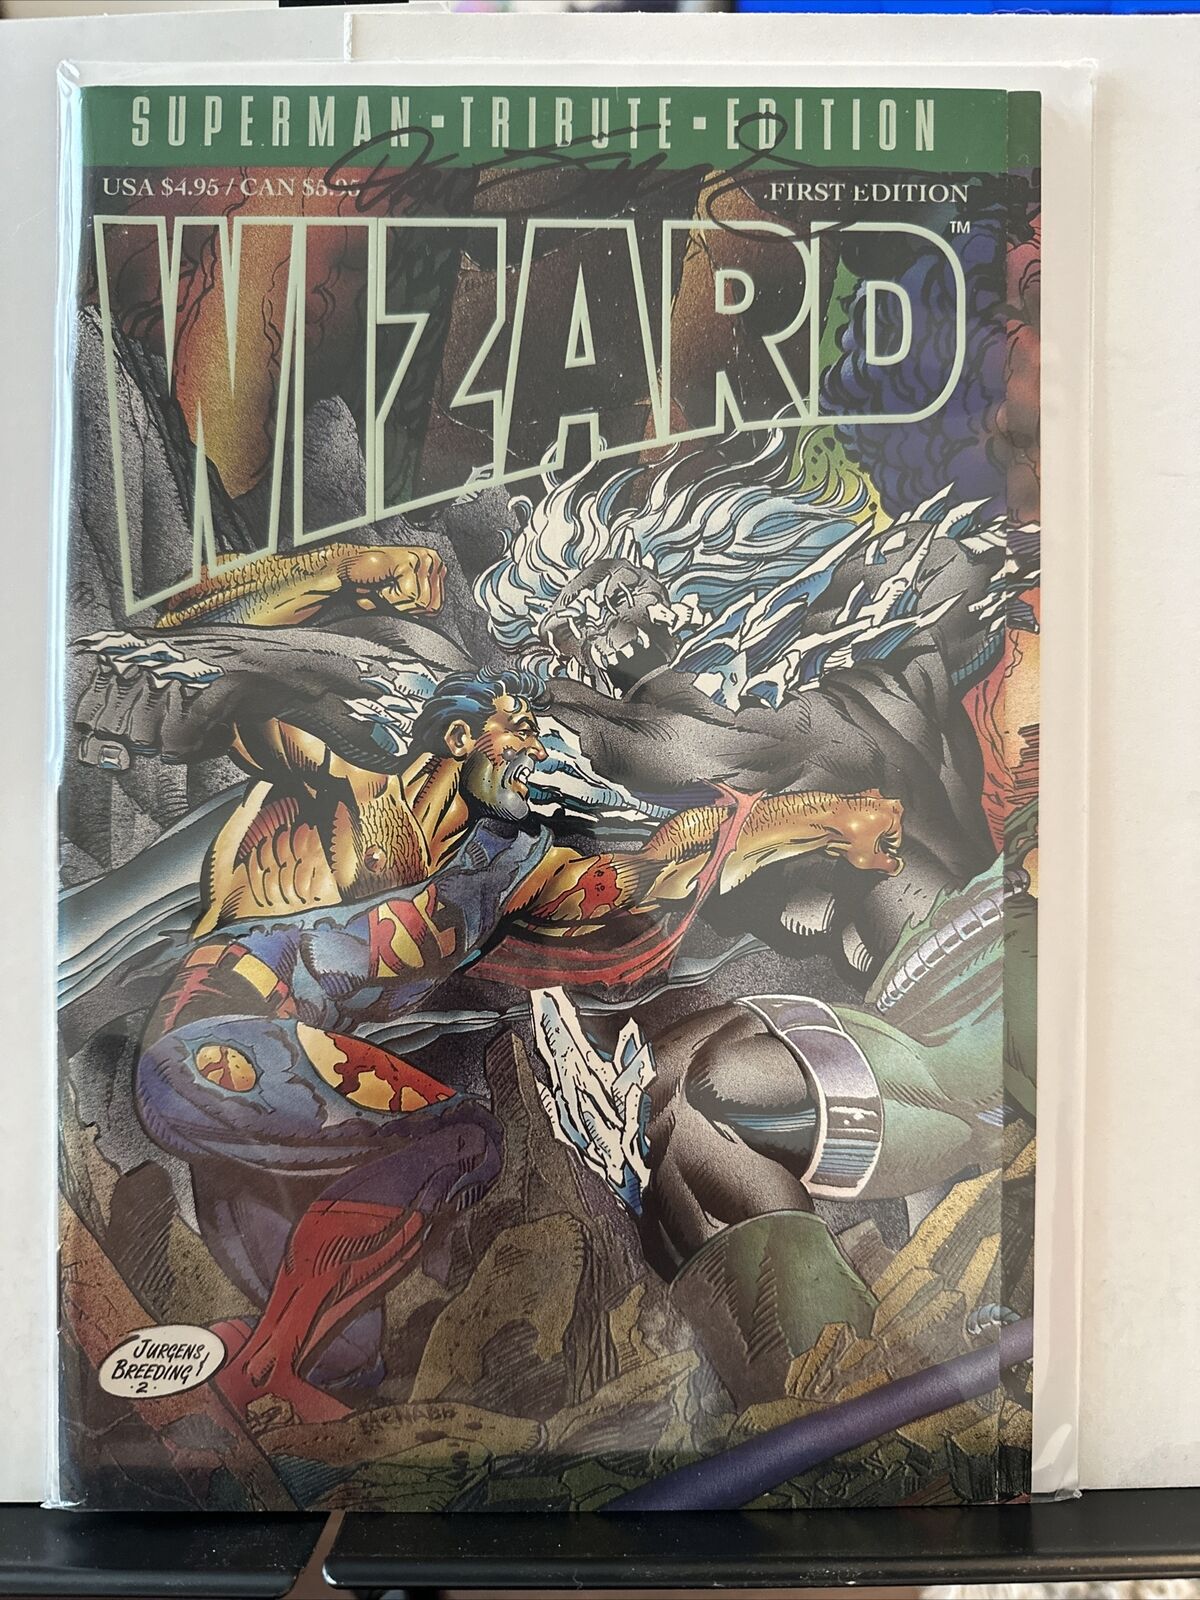 Wizard: The Superman Tribute Edition #1 (1993) Signed by Dan Jurgens w/COA.